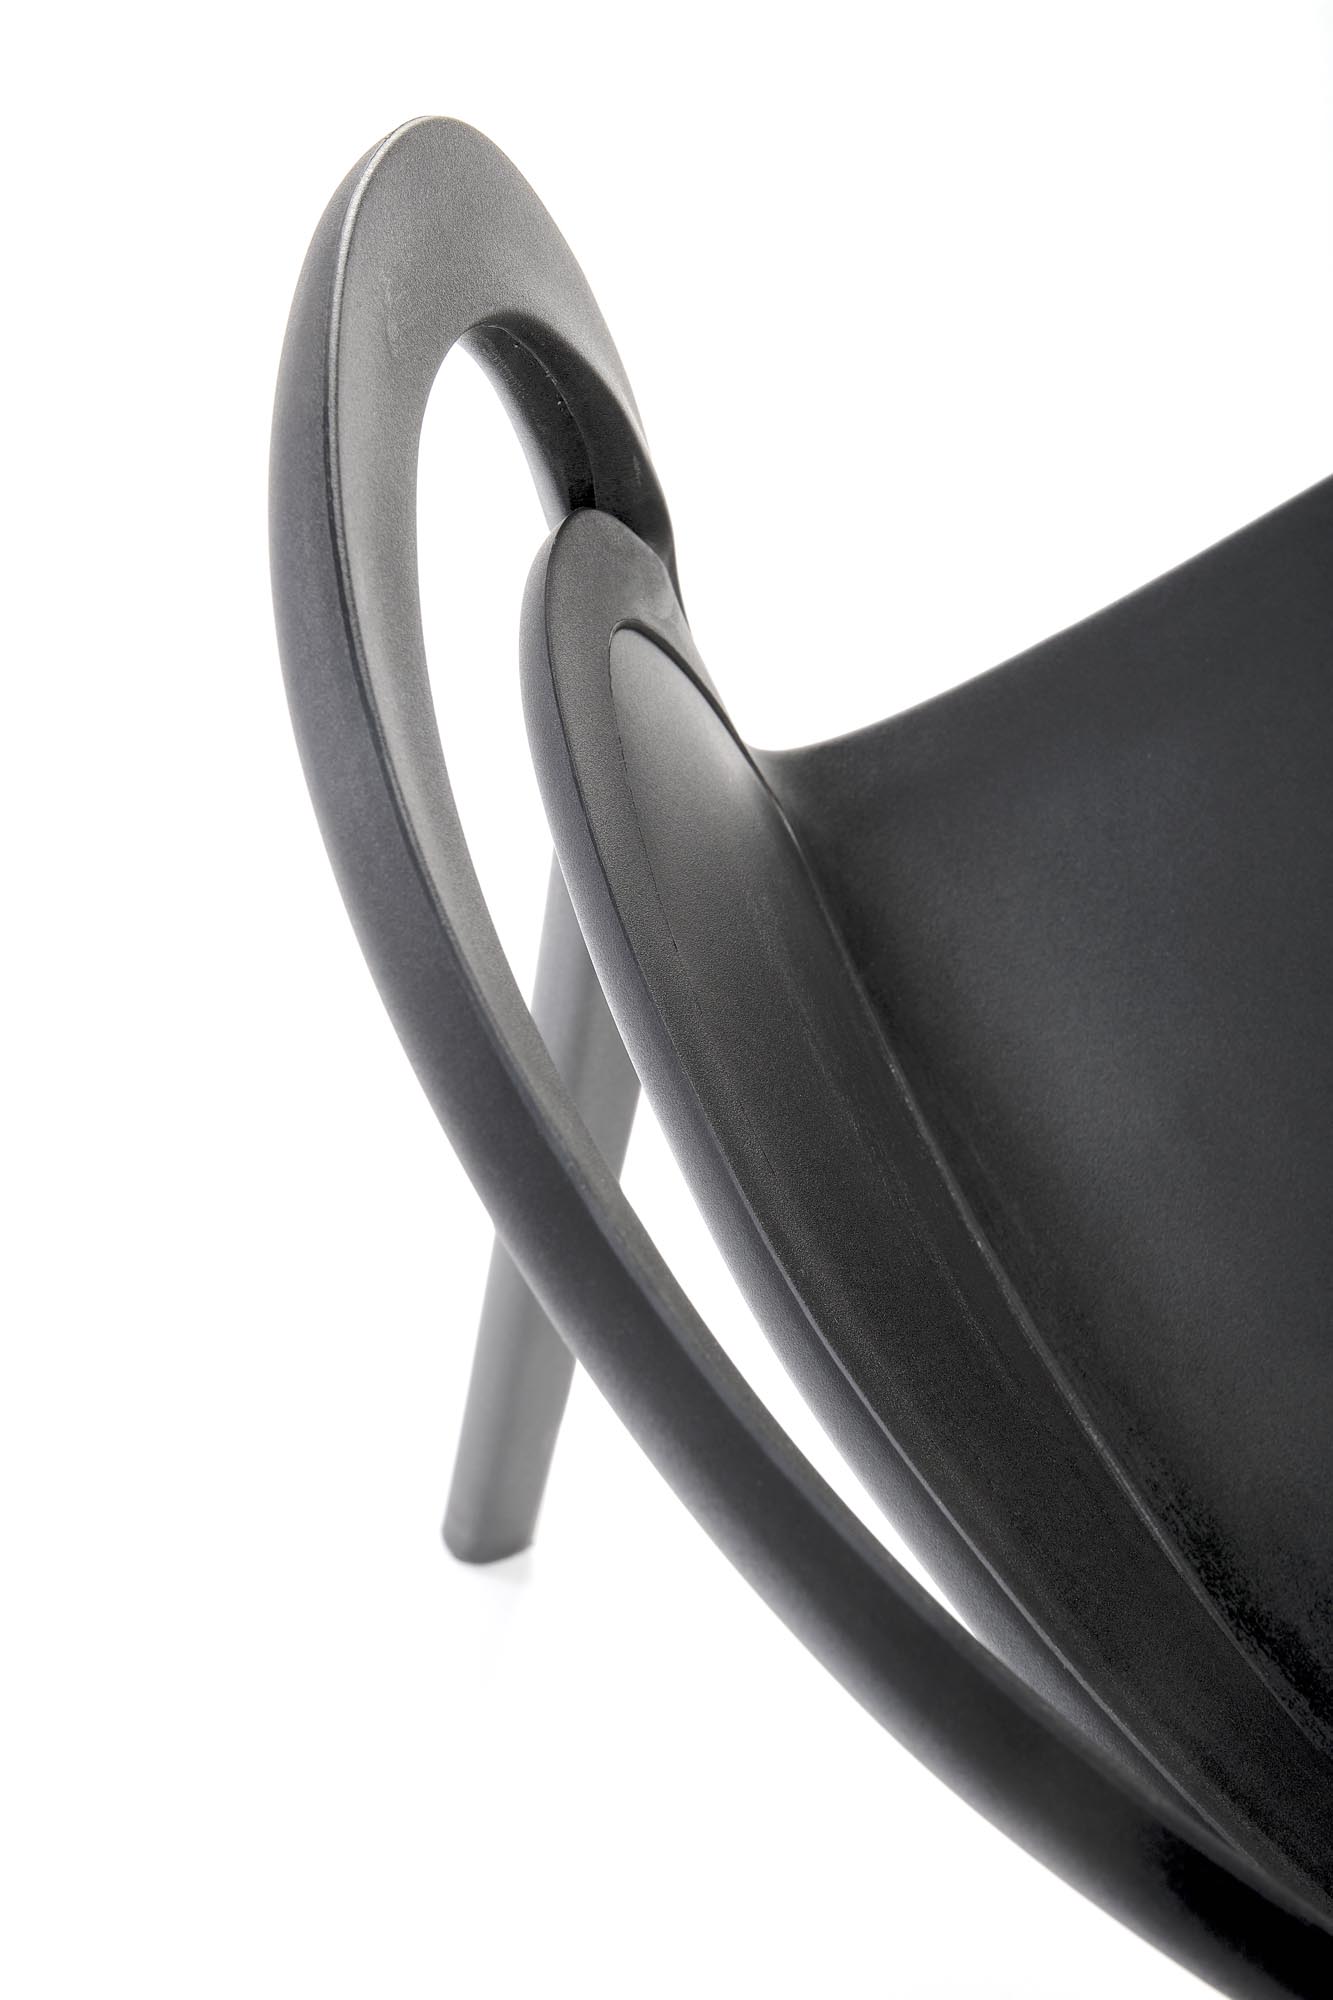 K490 Židle plastik Fekete(1p=4szt) Židle z tworzywa sztucznego k490 - Fekete